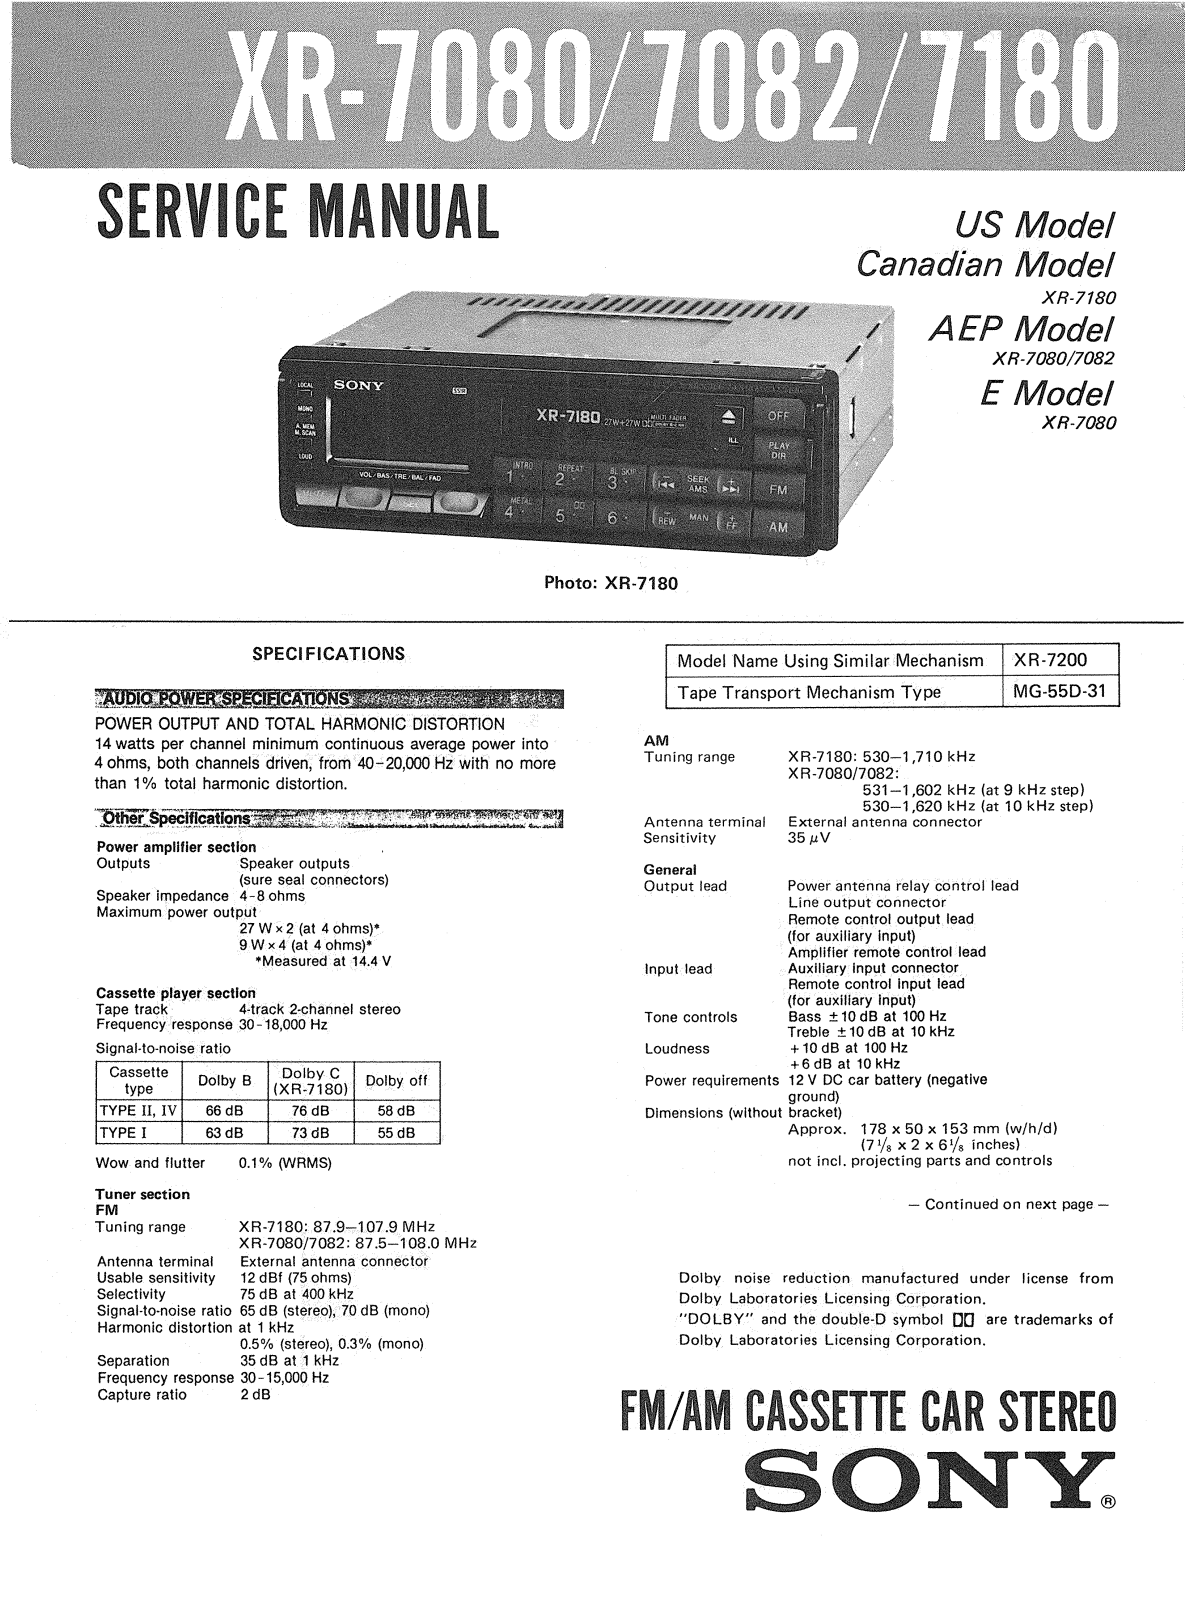 Sony XR-7080 Service manual